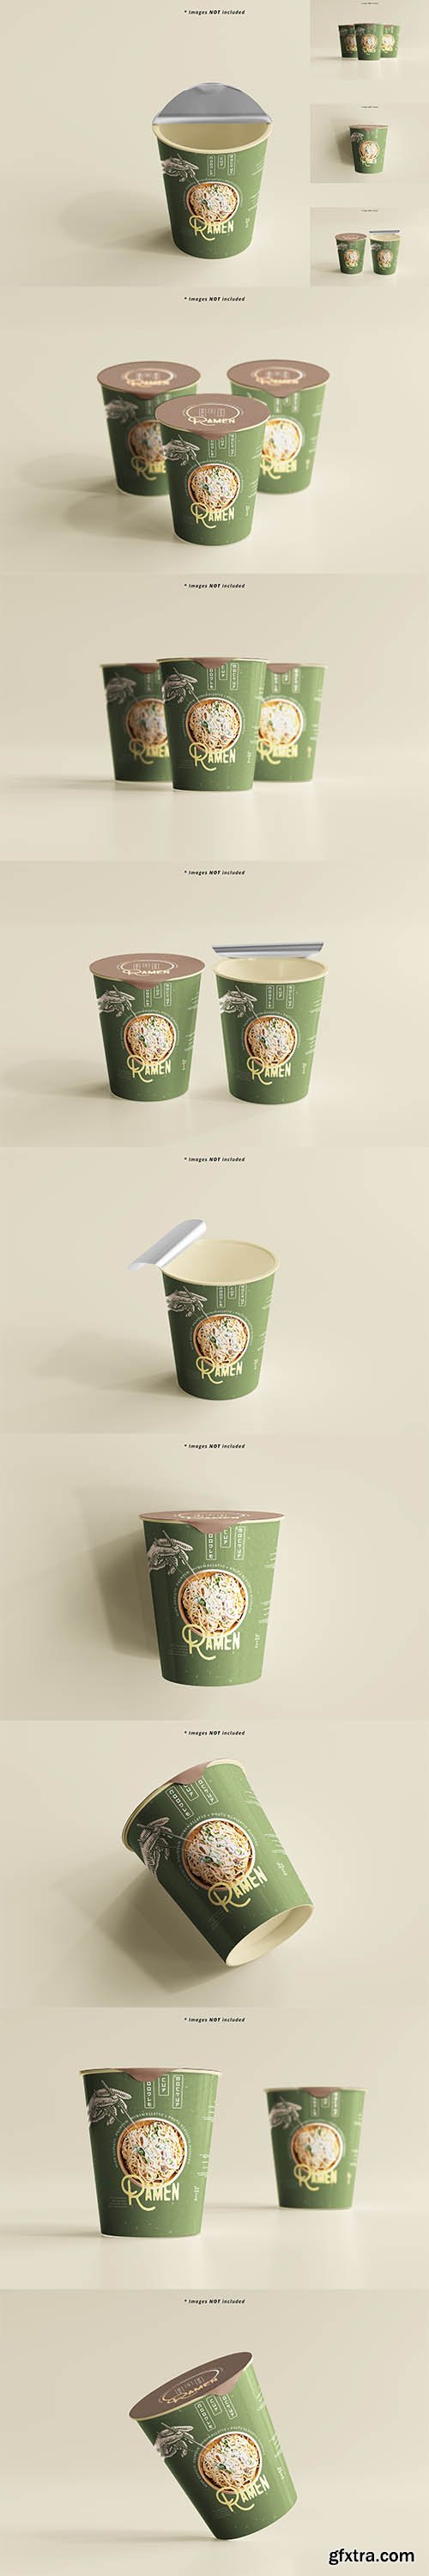 Noodle cup packaging mockup 2